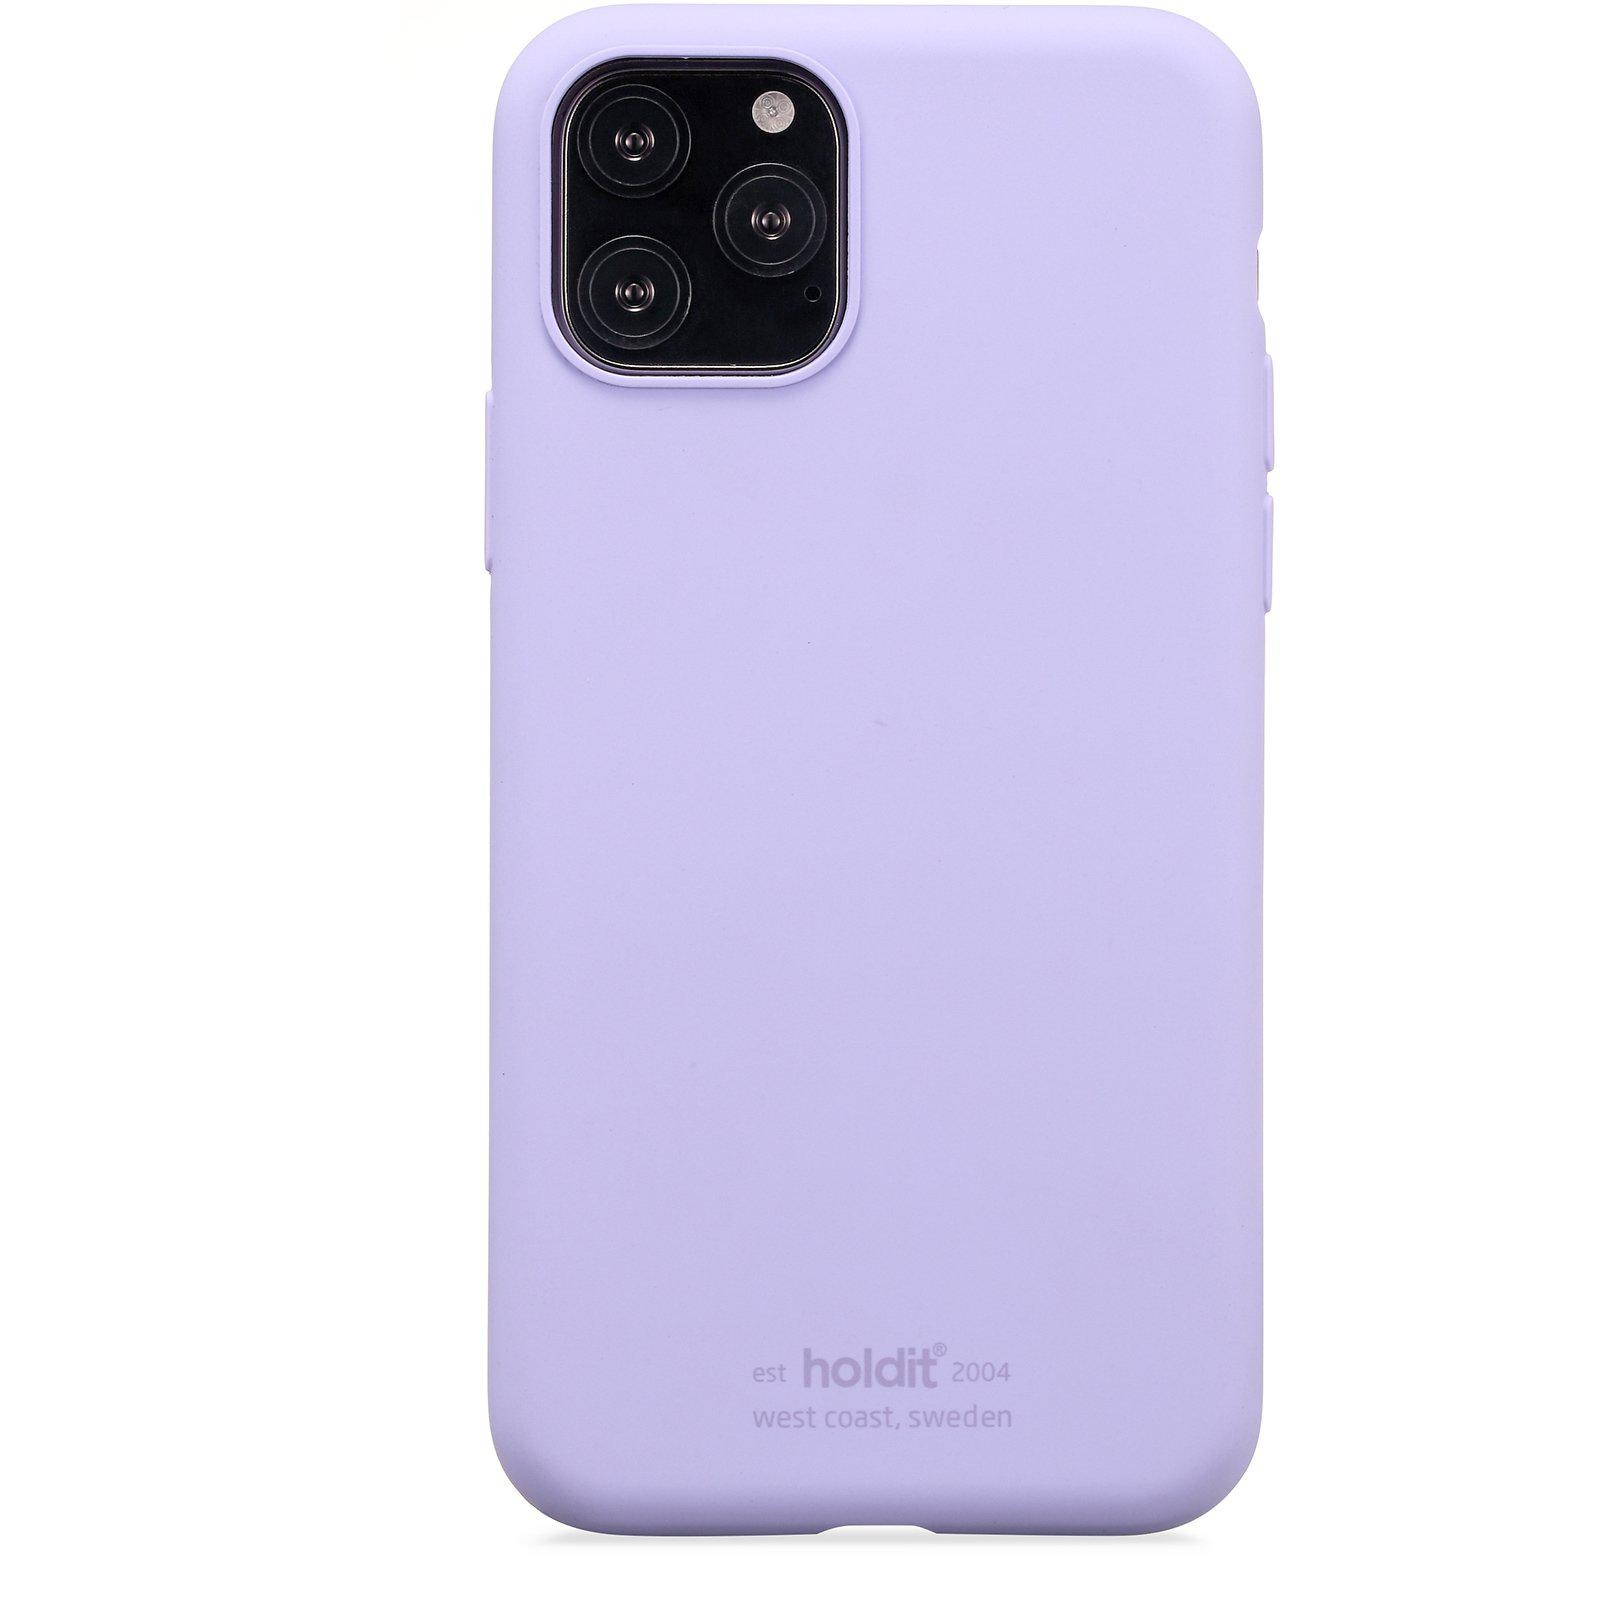 Silikonhülle iPhone X/XS Lavender